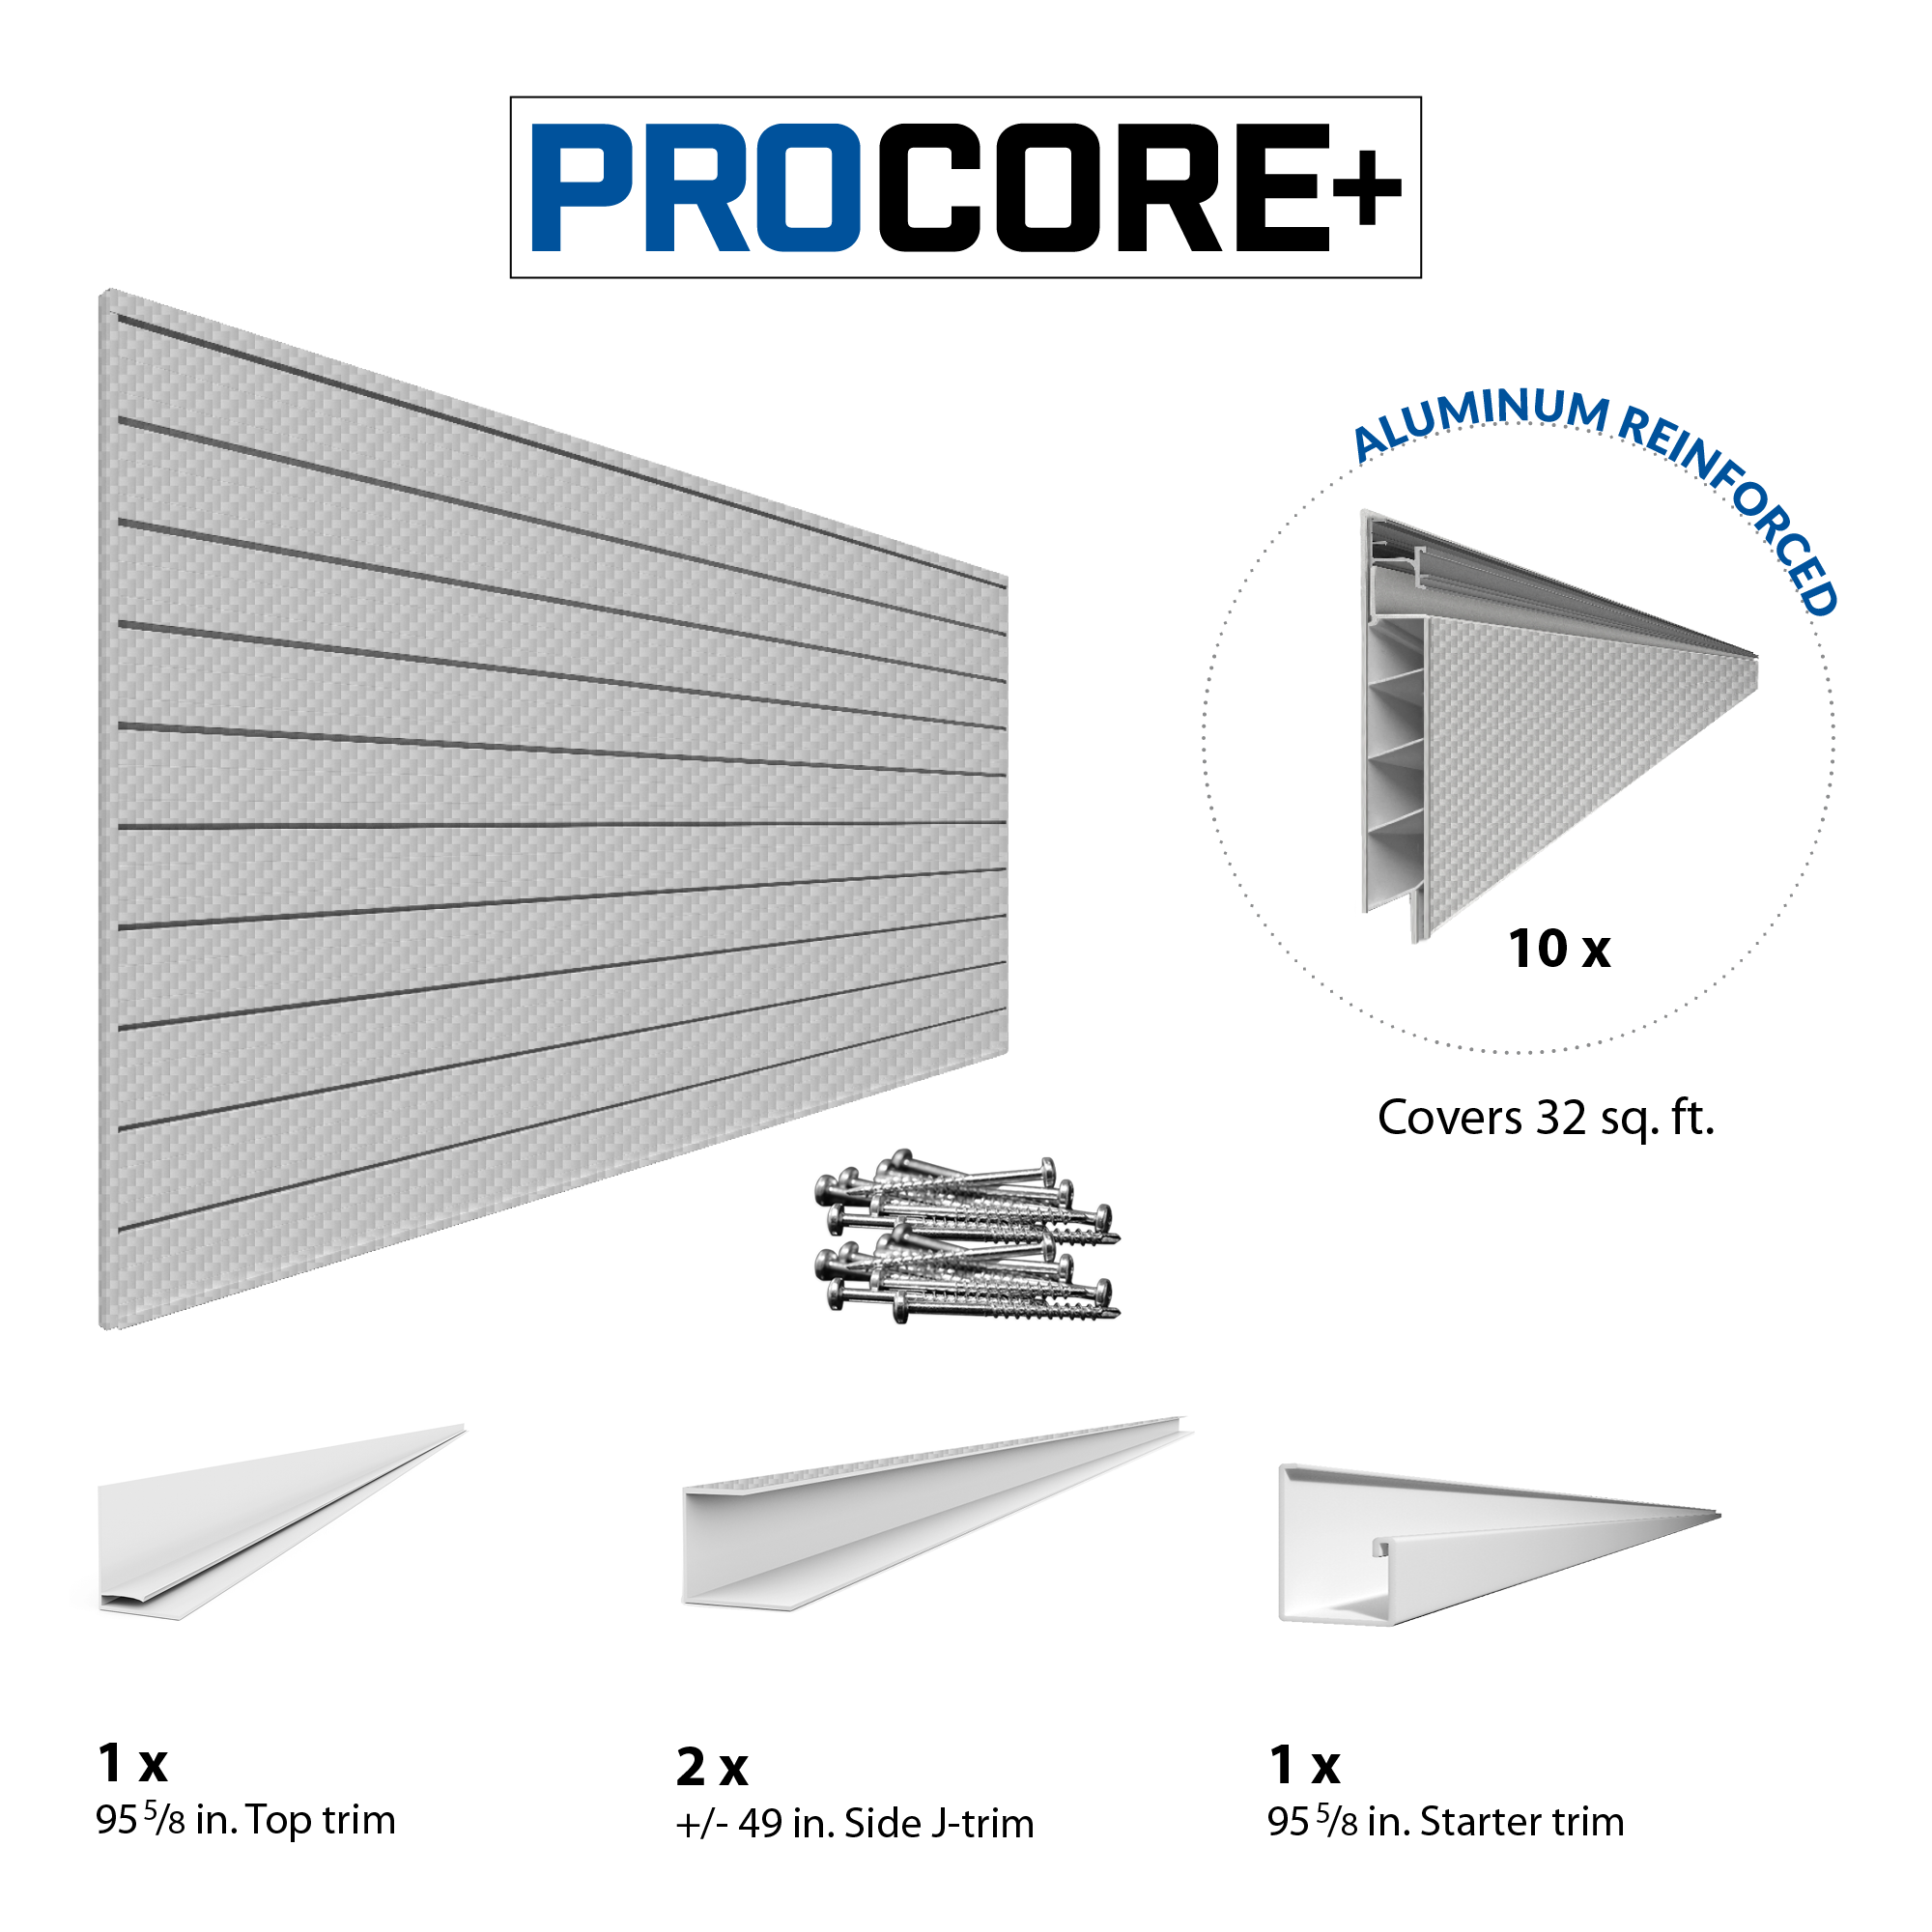 4 x 8 ft. PROCORE+ Silver gray Carbon fiber PVC Slatwall